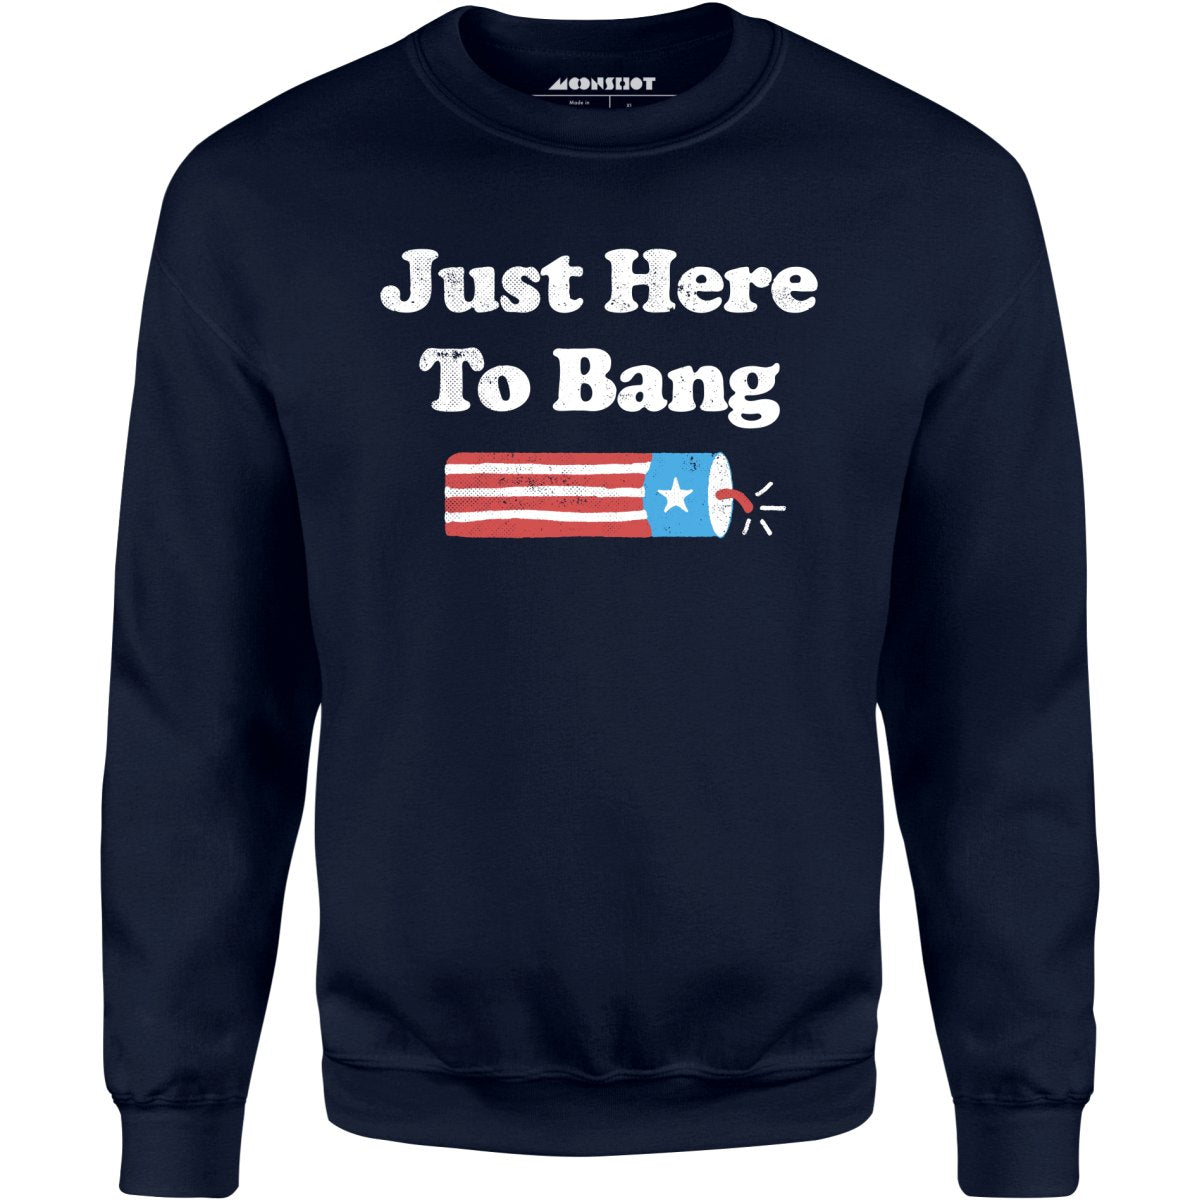 Just Here to Bang - Unisex Sweatshirt